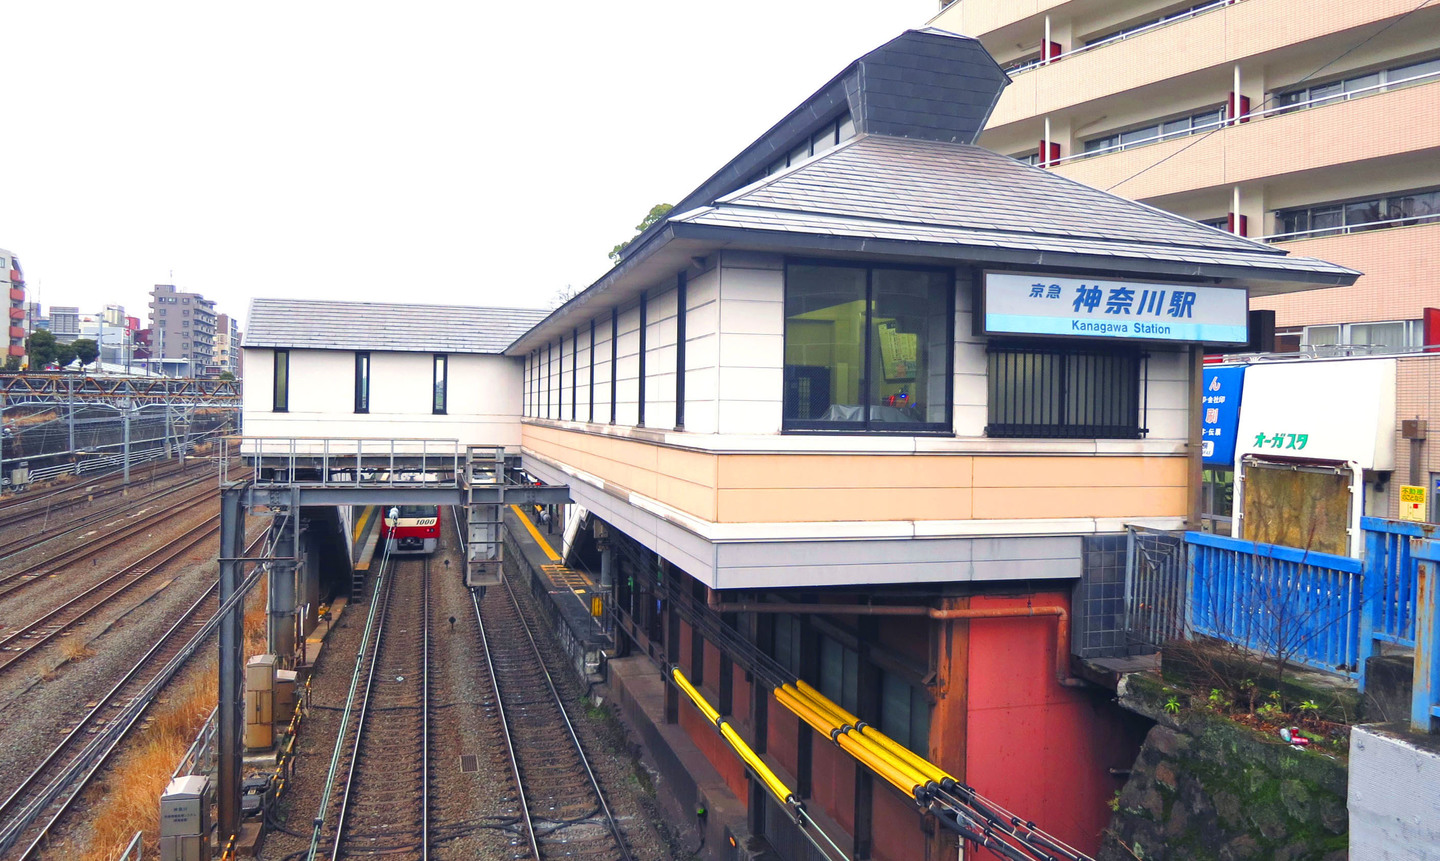 京急線神奈川駅の駅舎